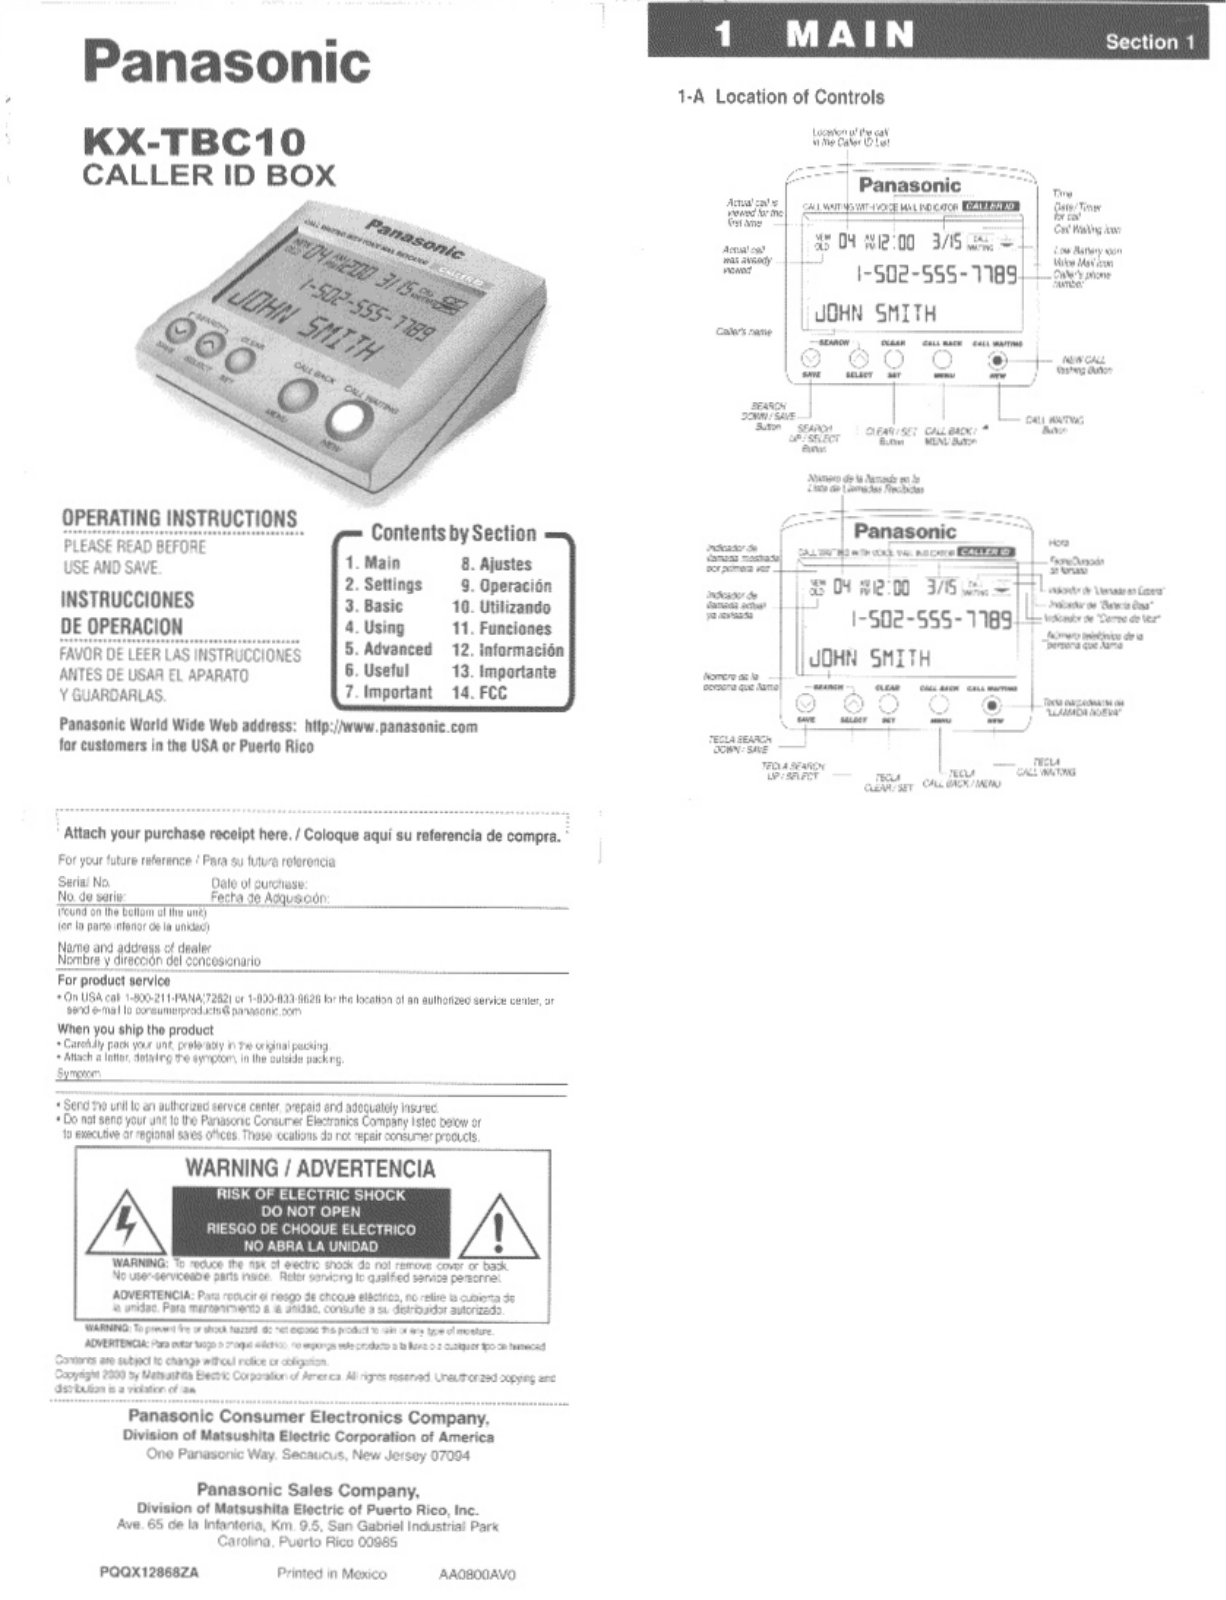 Panasonic kx-tbc10b Operation Manual